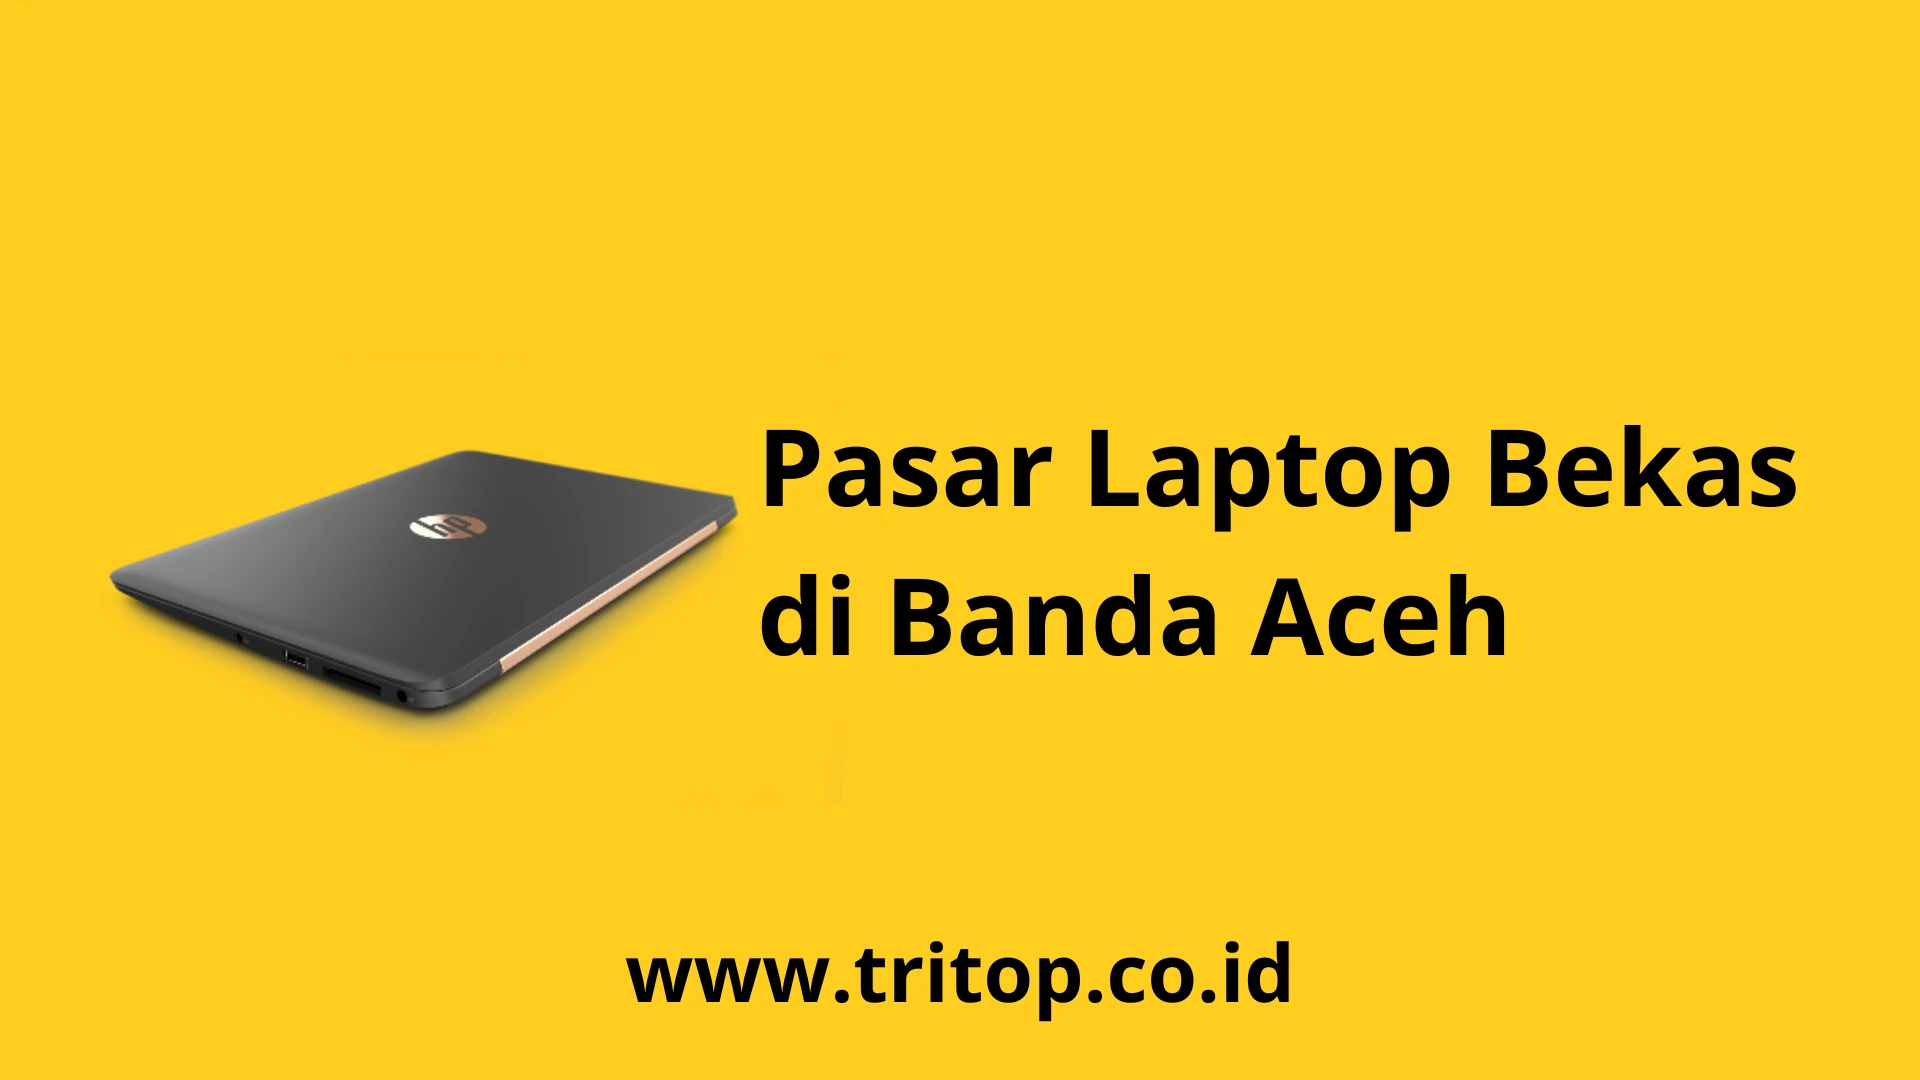 Laptop Bekas Banda Aceh Tritop.co.id